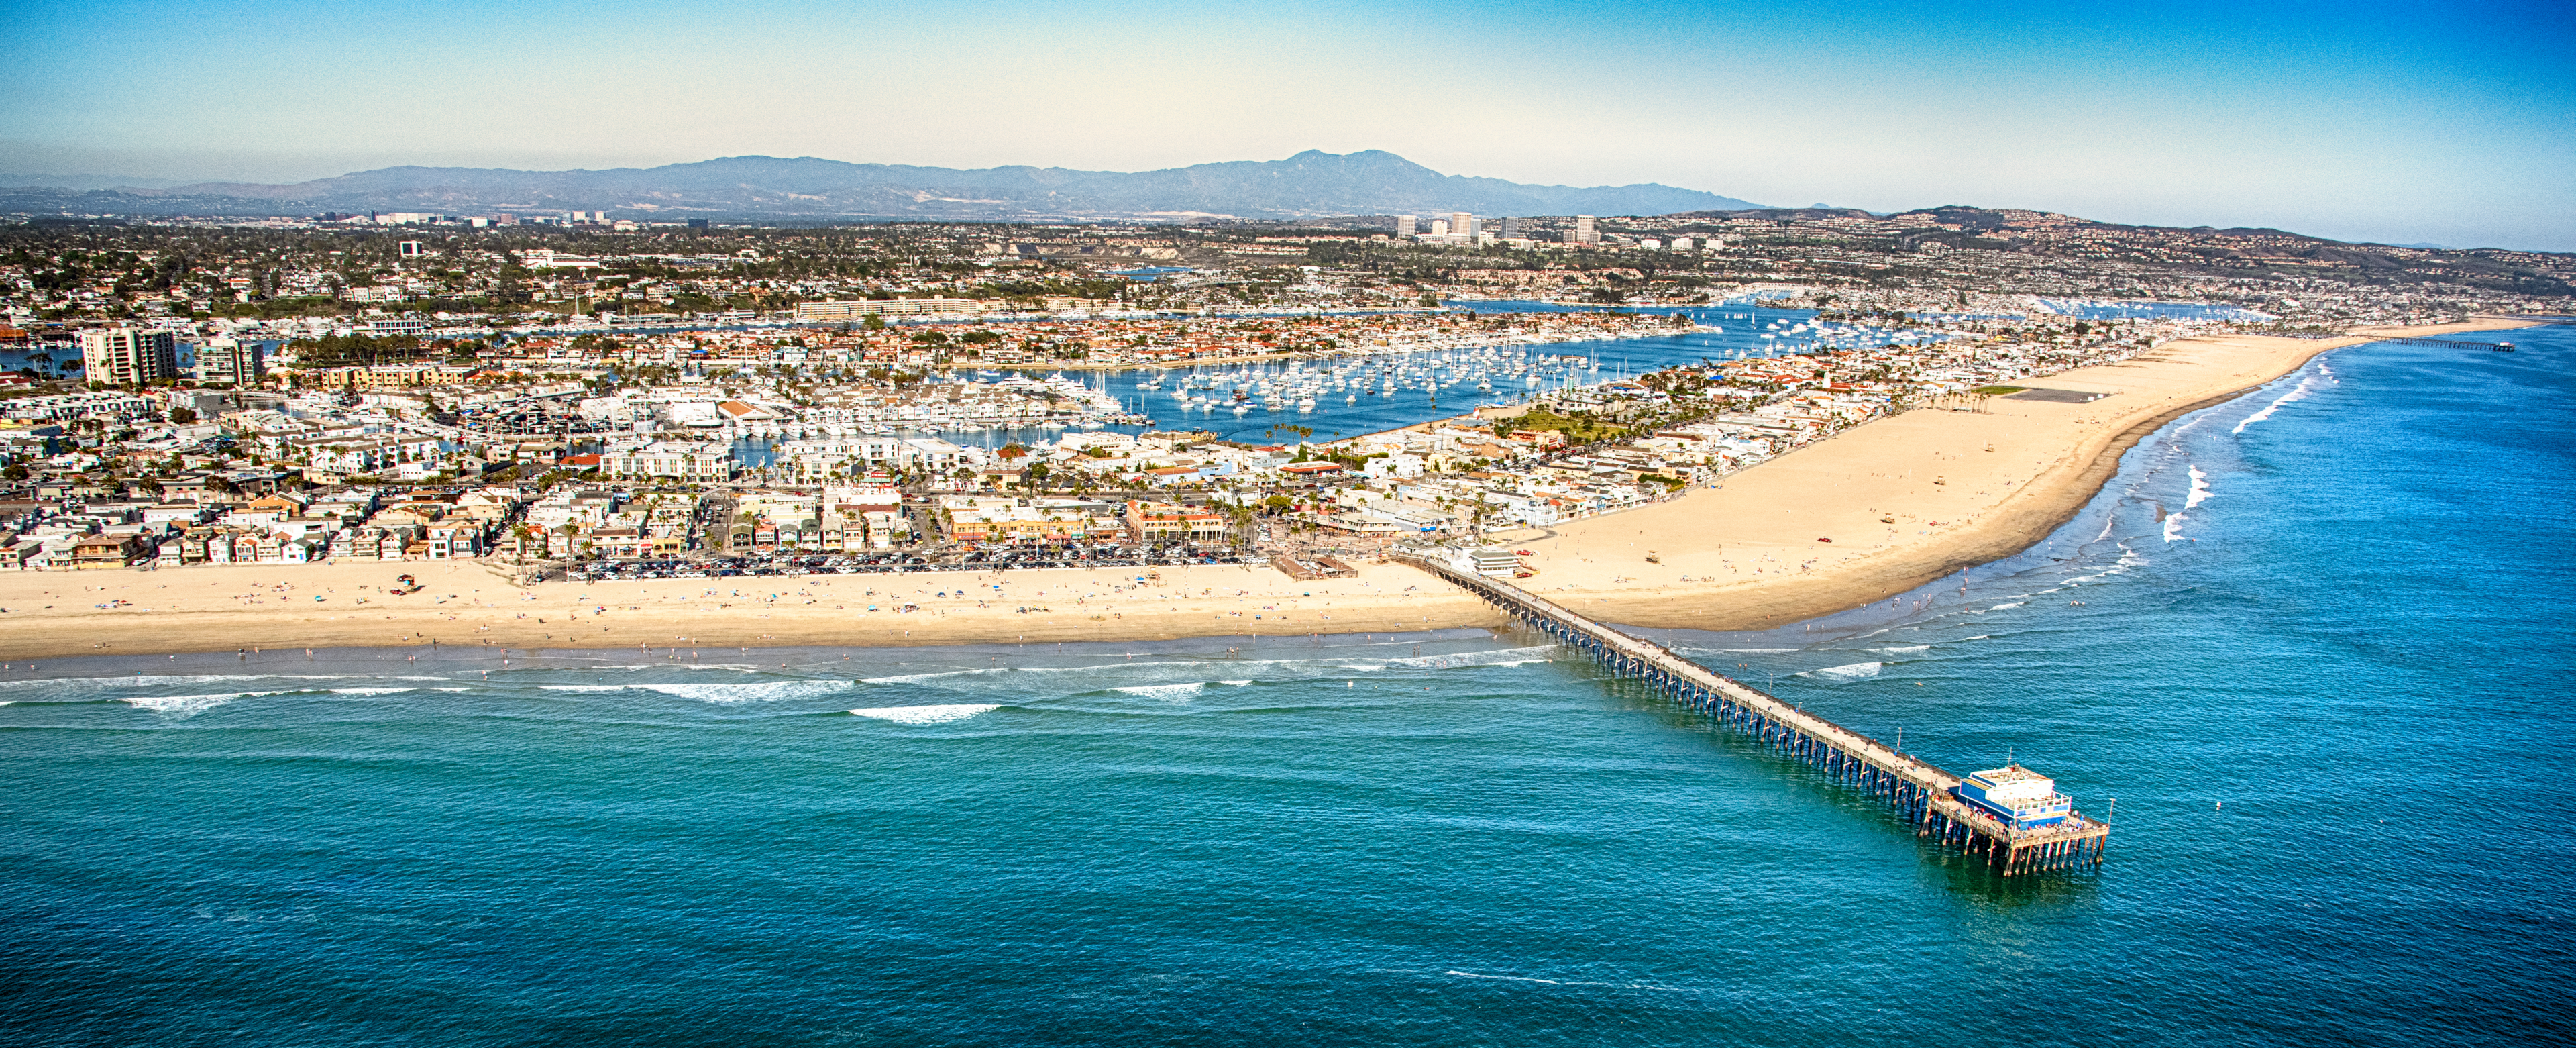 Northern Orange County California city of Newport Beach